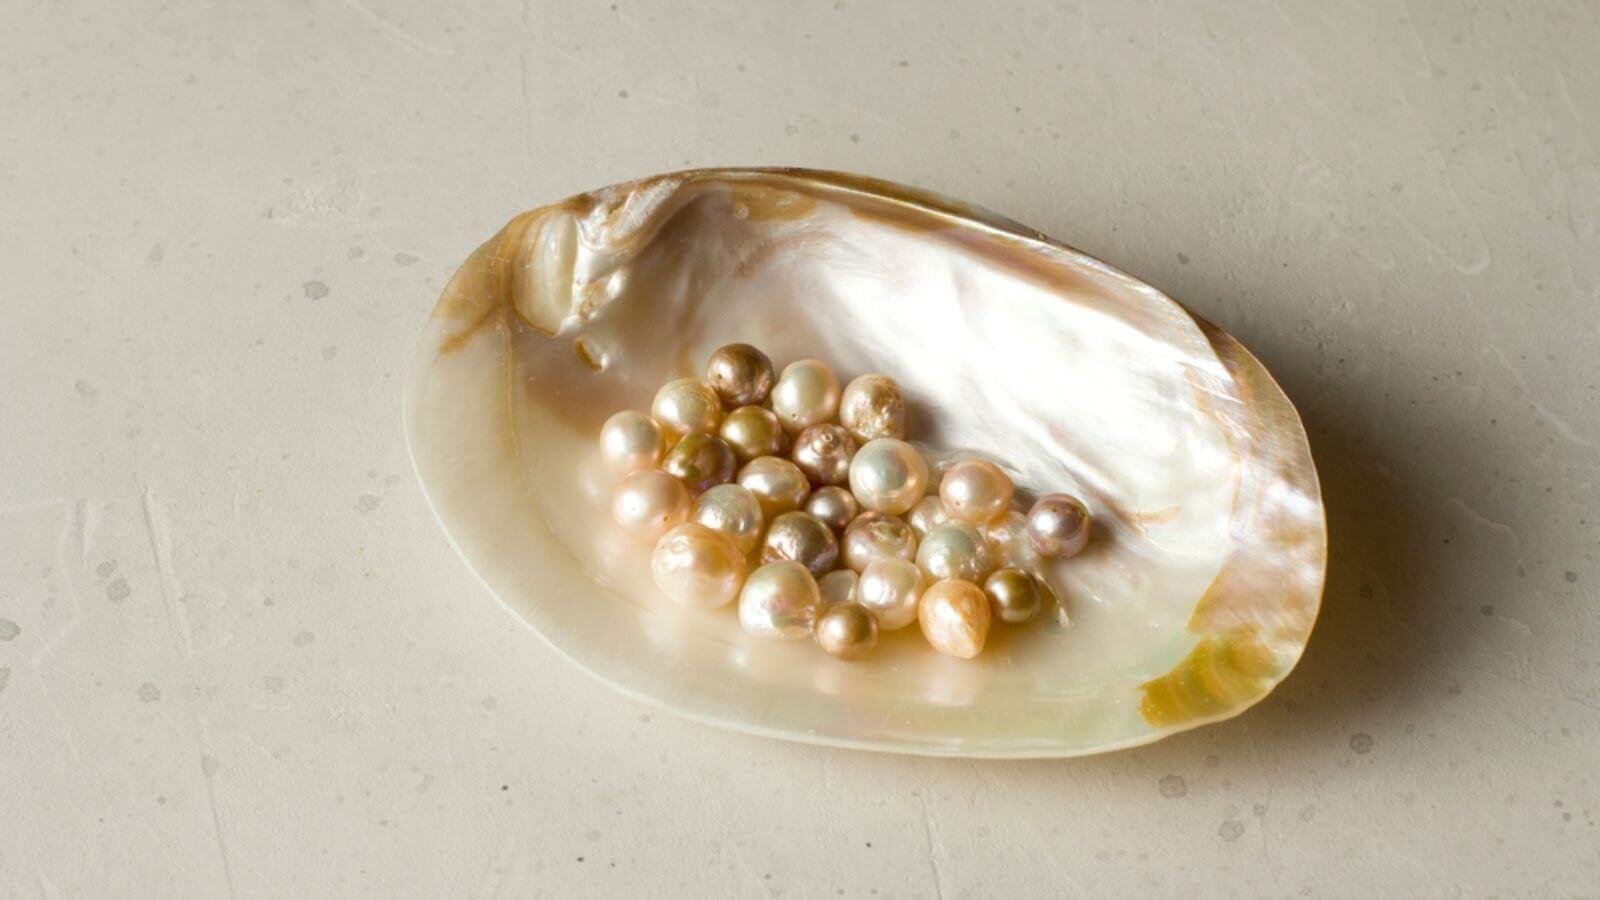 Pearl Gemstone